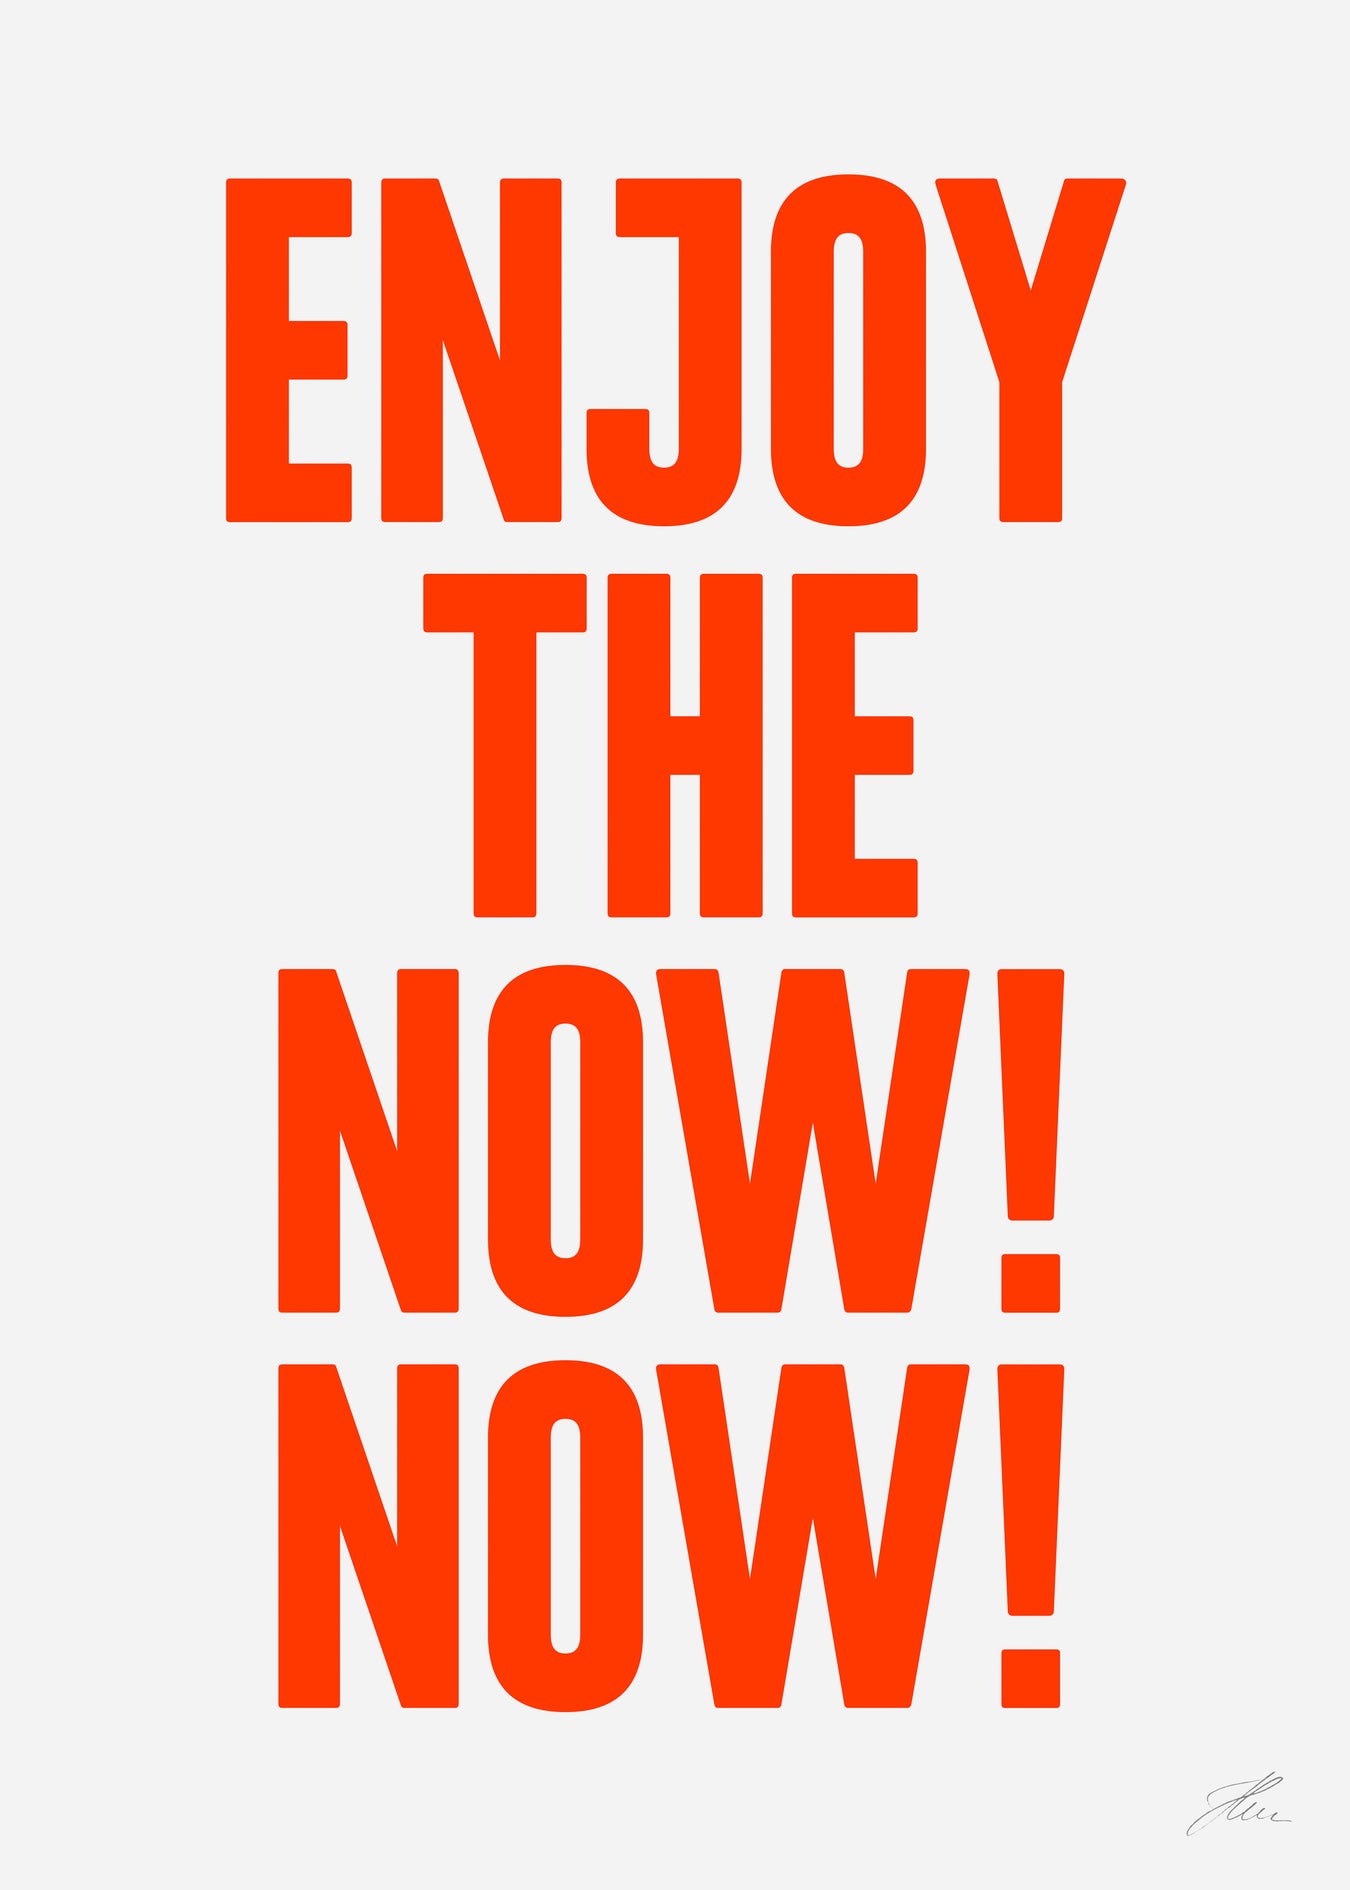 Enjoy the now! Now!